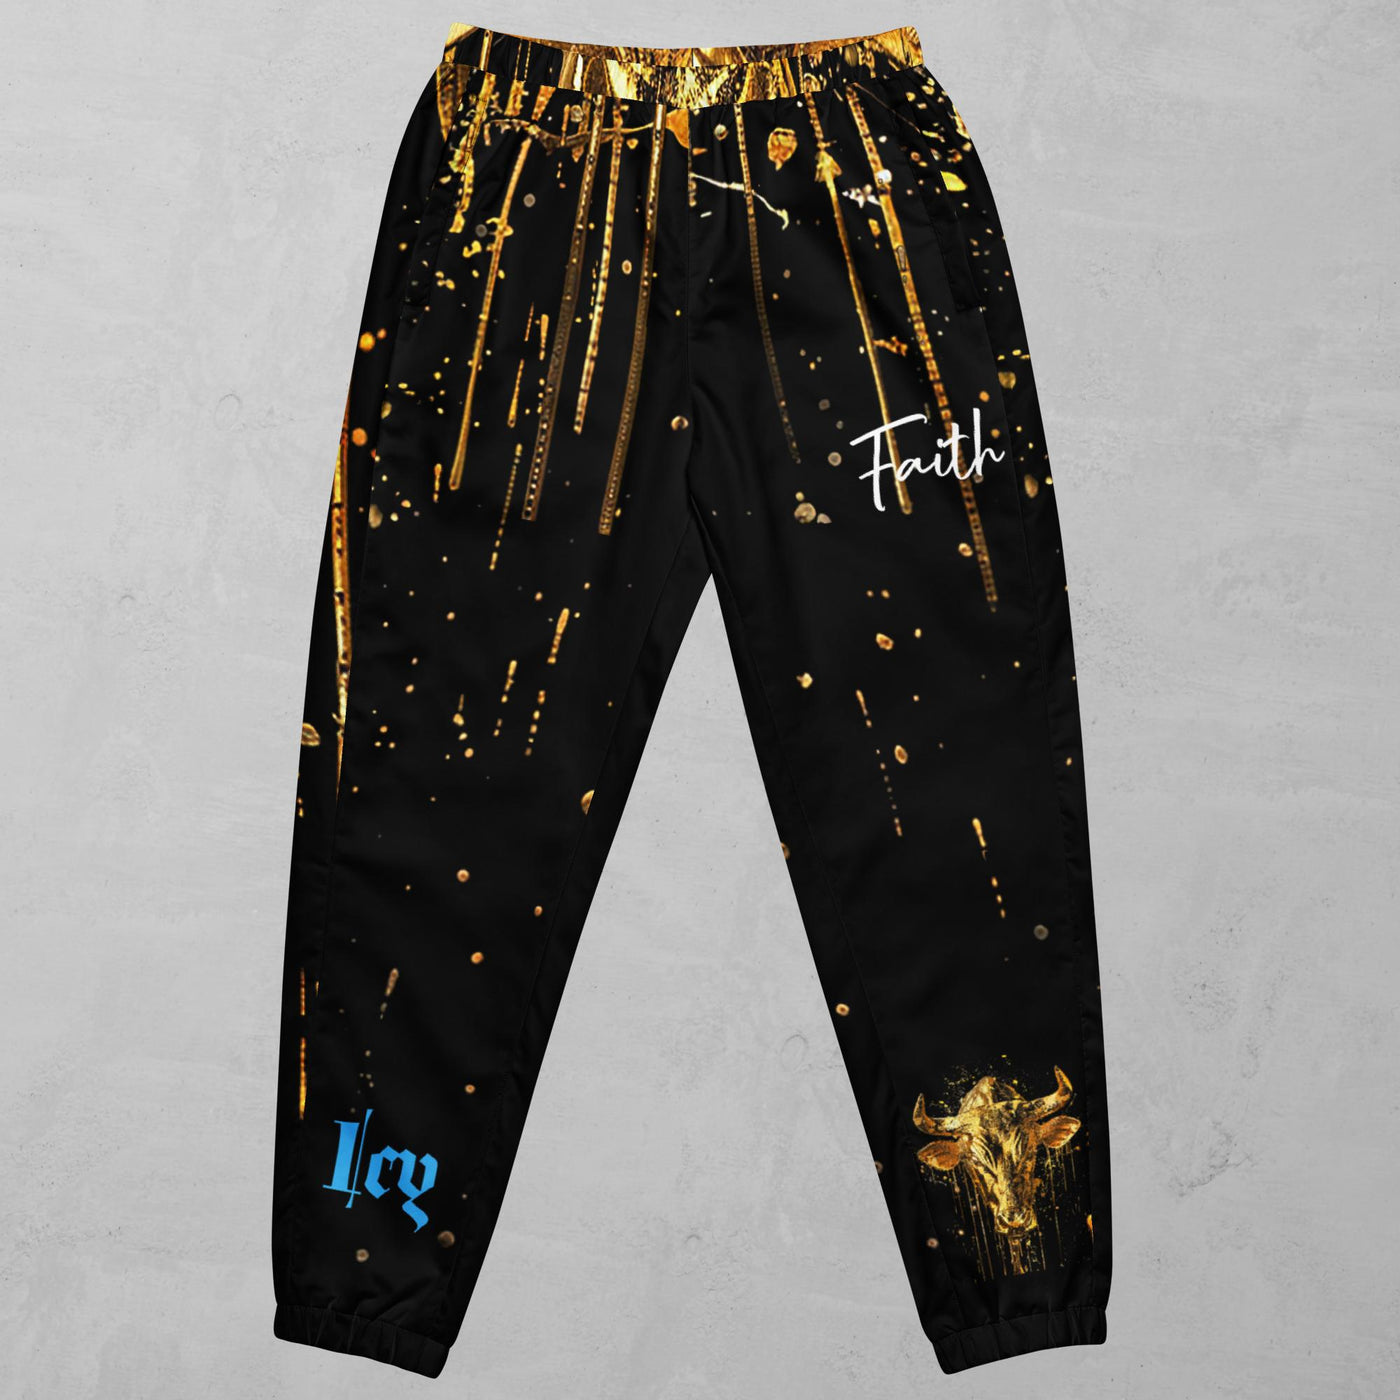 J.A Faith Gold Bull- Men's track pants